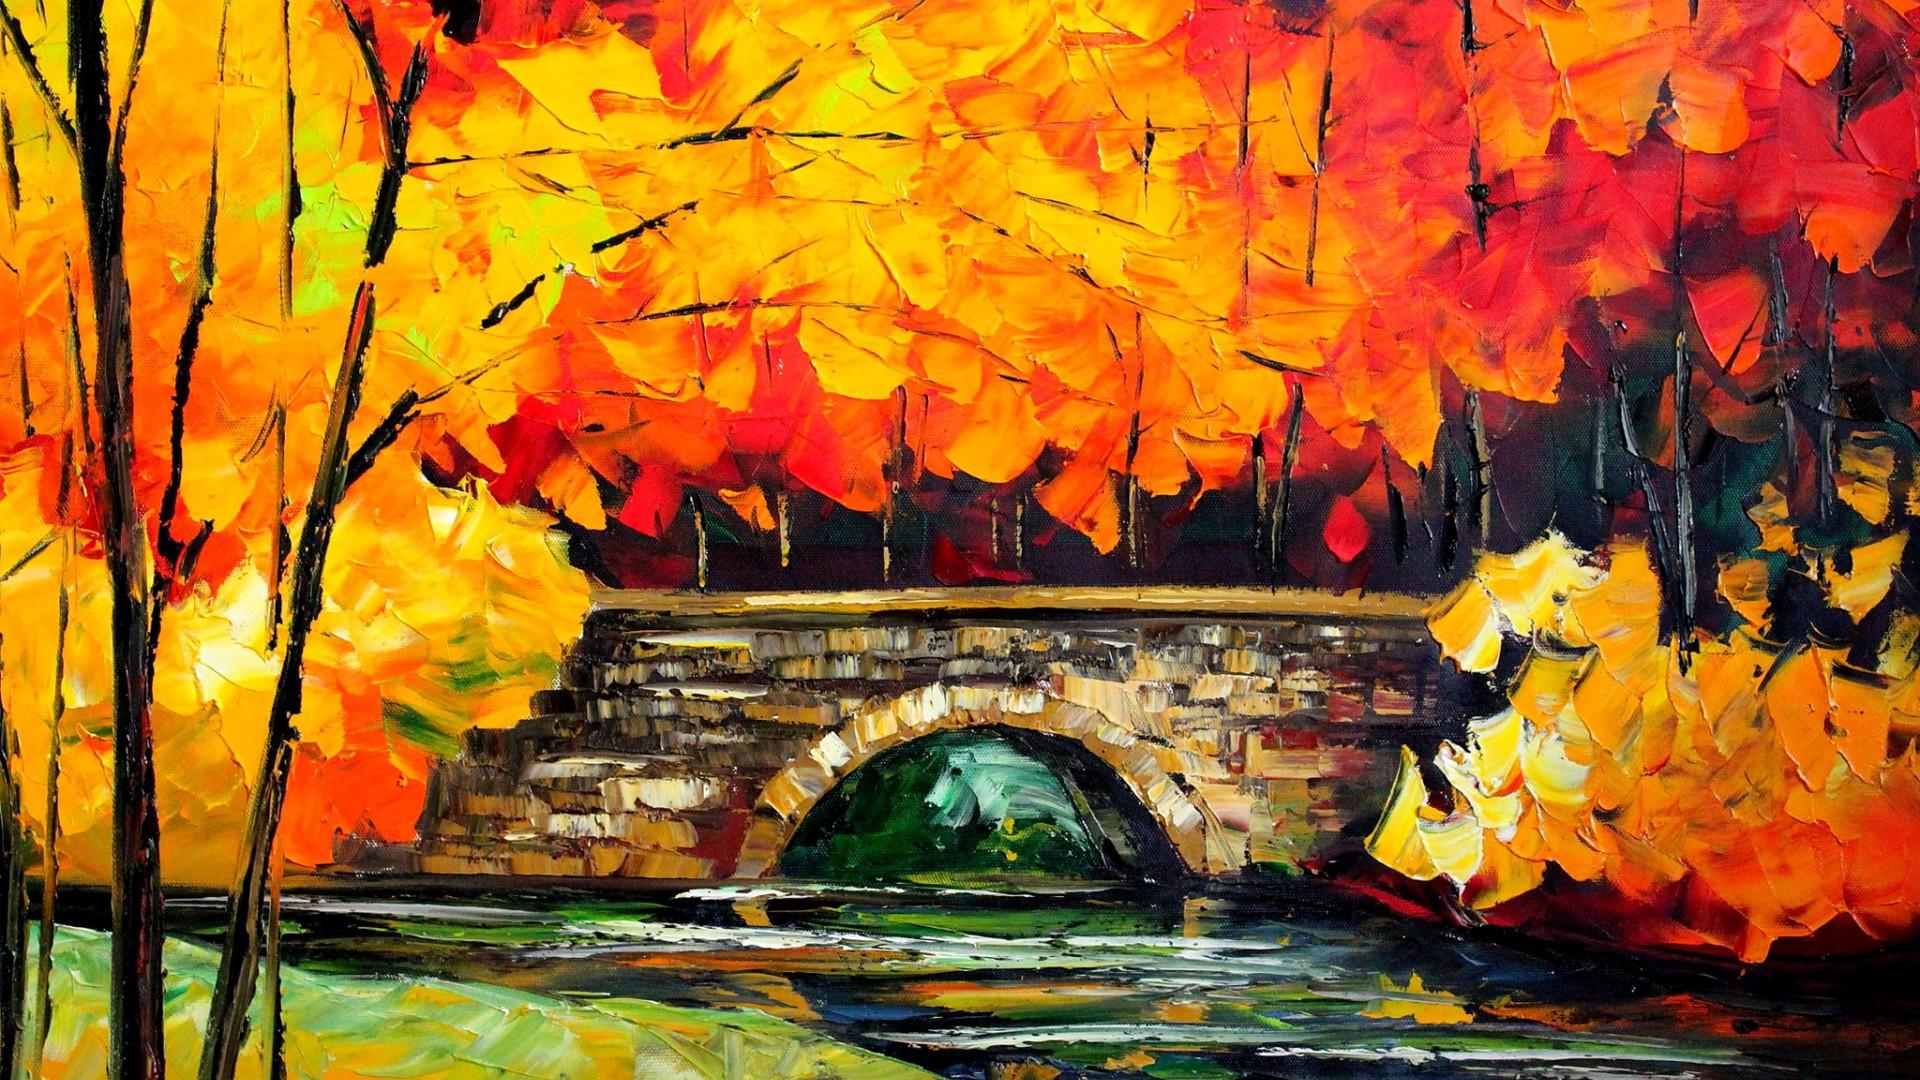 Late Autumn Bridge Painting HD Wallpaper Image Free Download